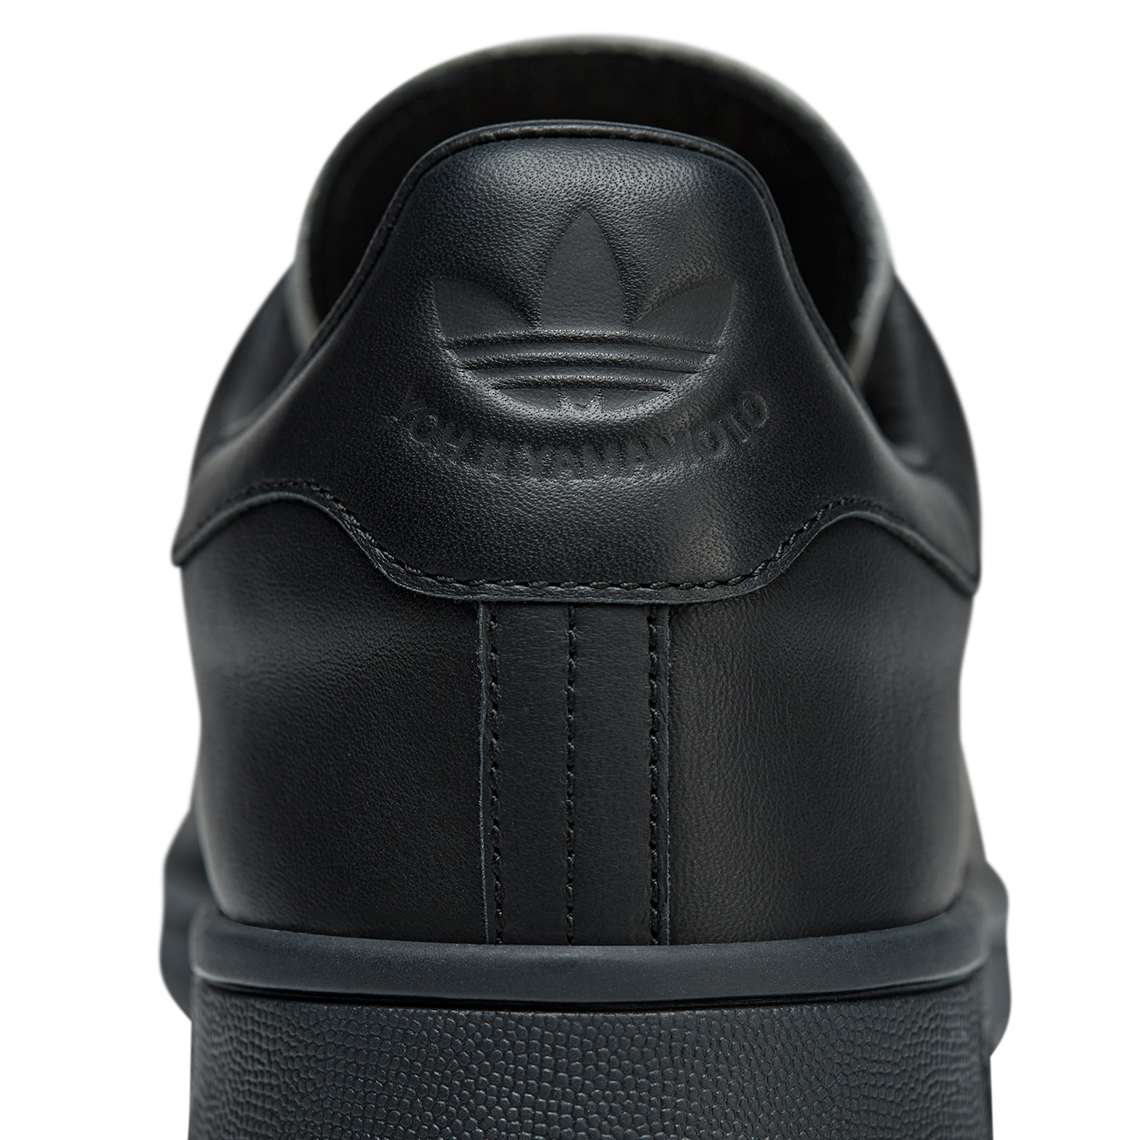 Yohji Yamamoto adidas Y-3 Stan Smith Release Date | SneakerNews.com